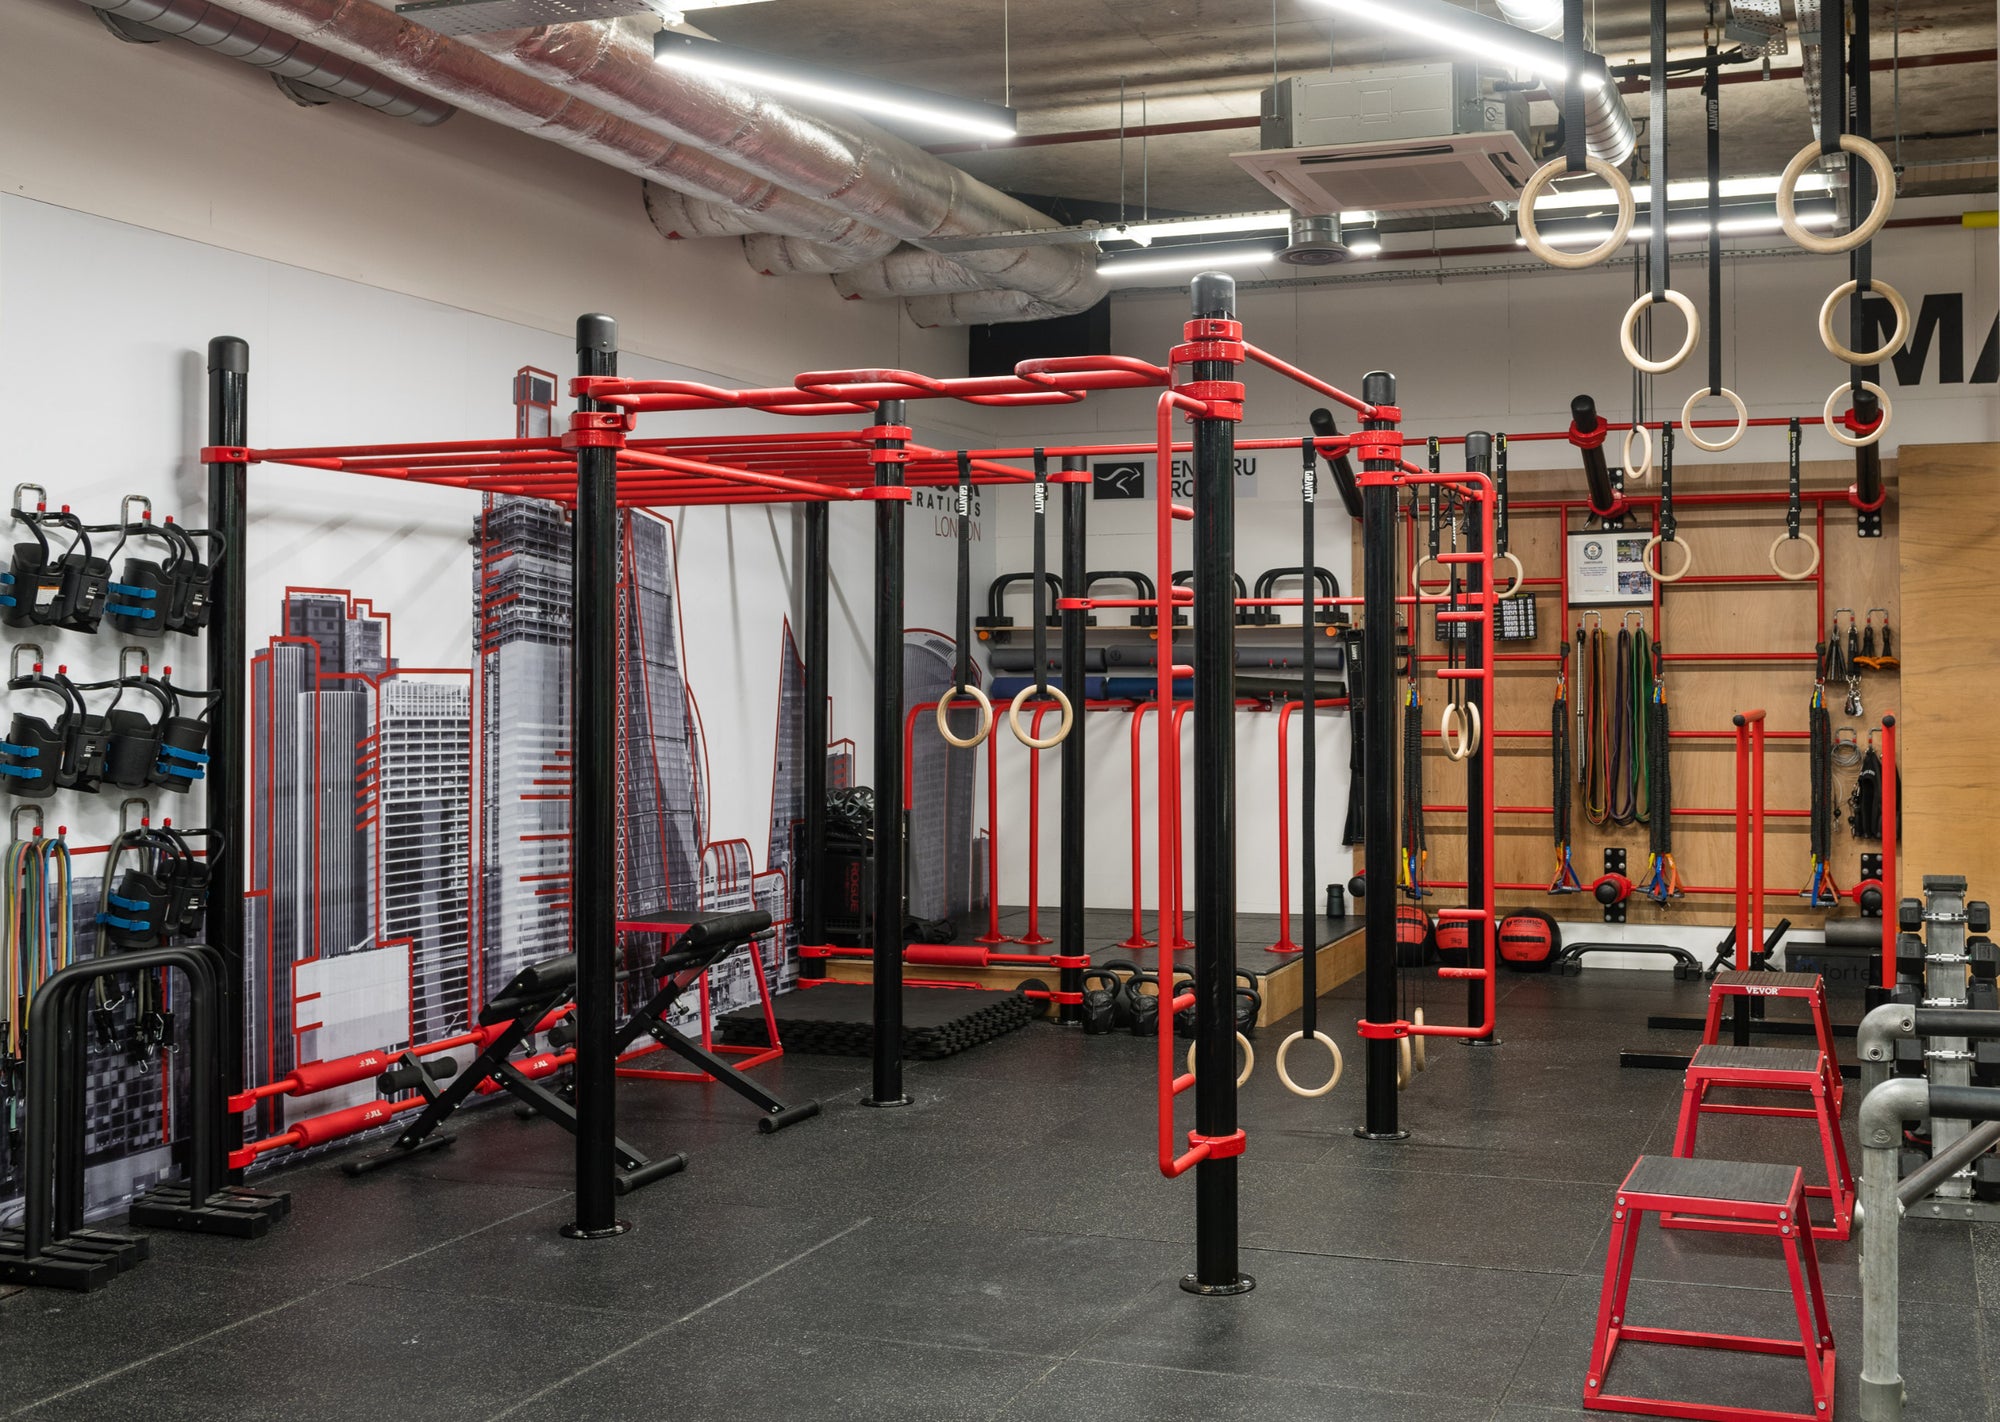 Great places to train - Kalos Sthenos Republic calisthenics gym, London